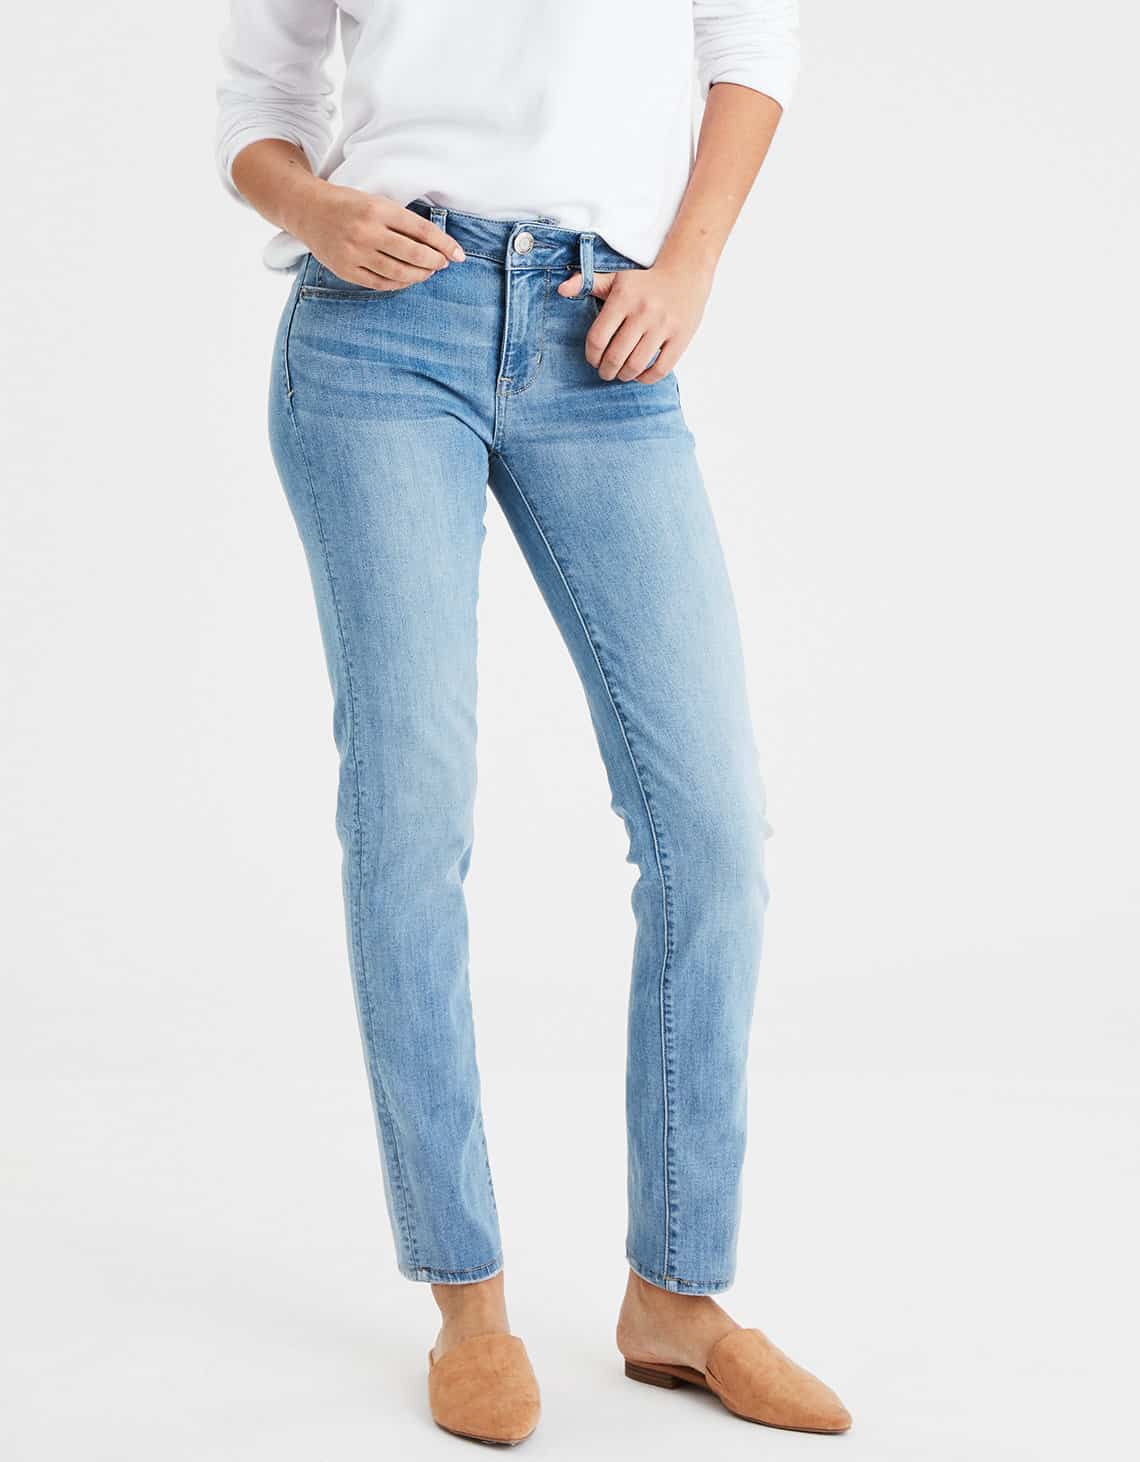 kevlar lined jeans